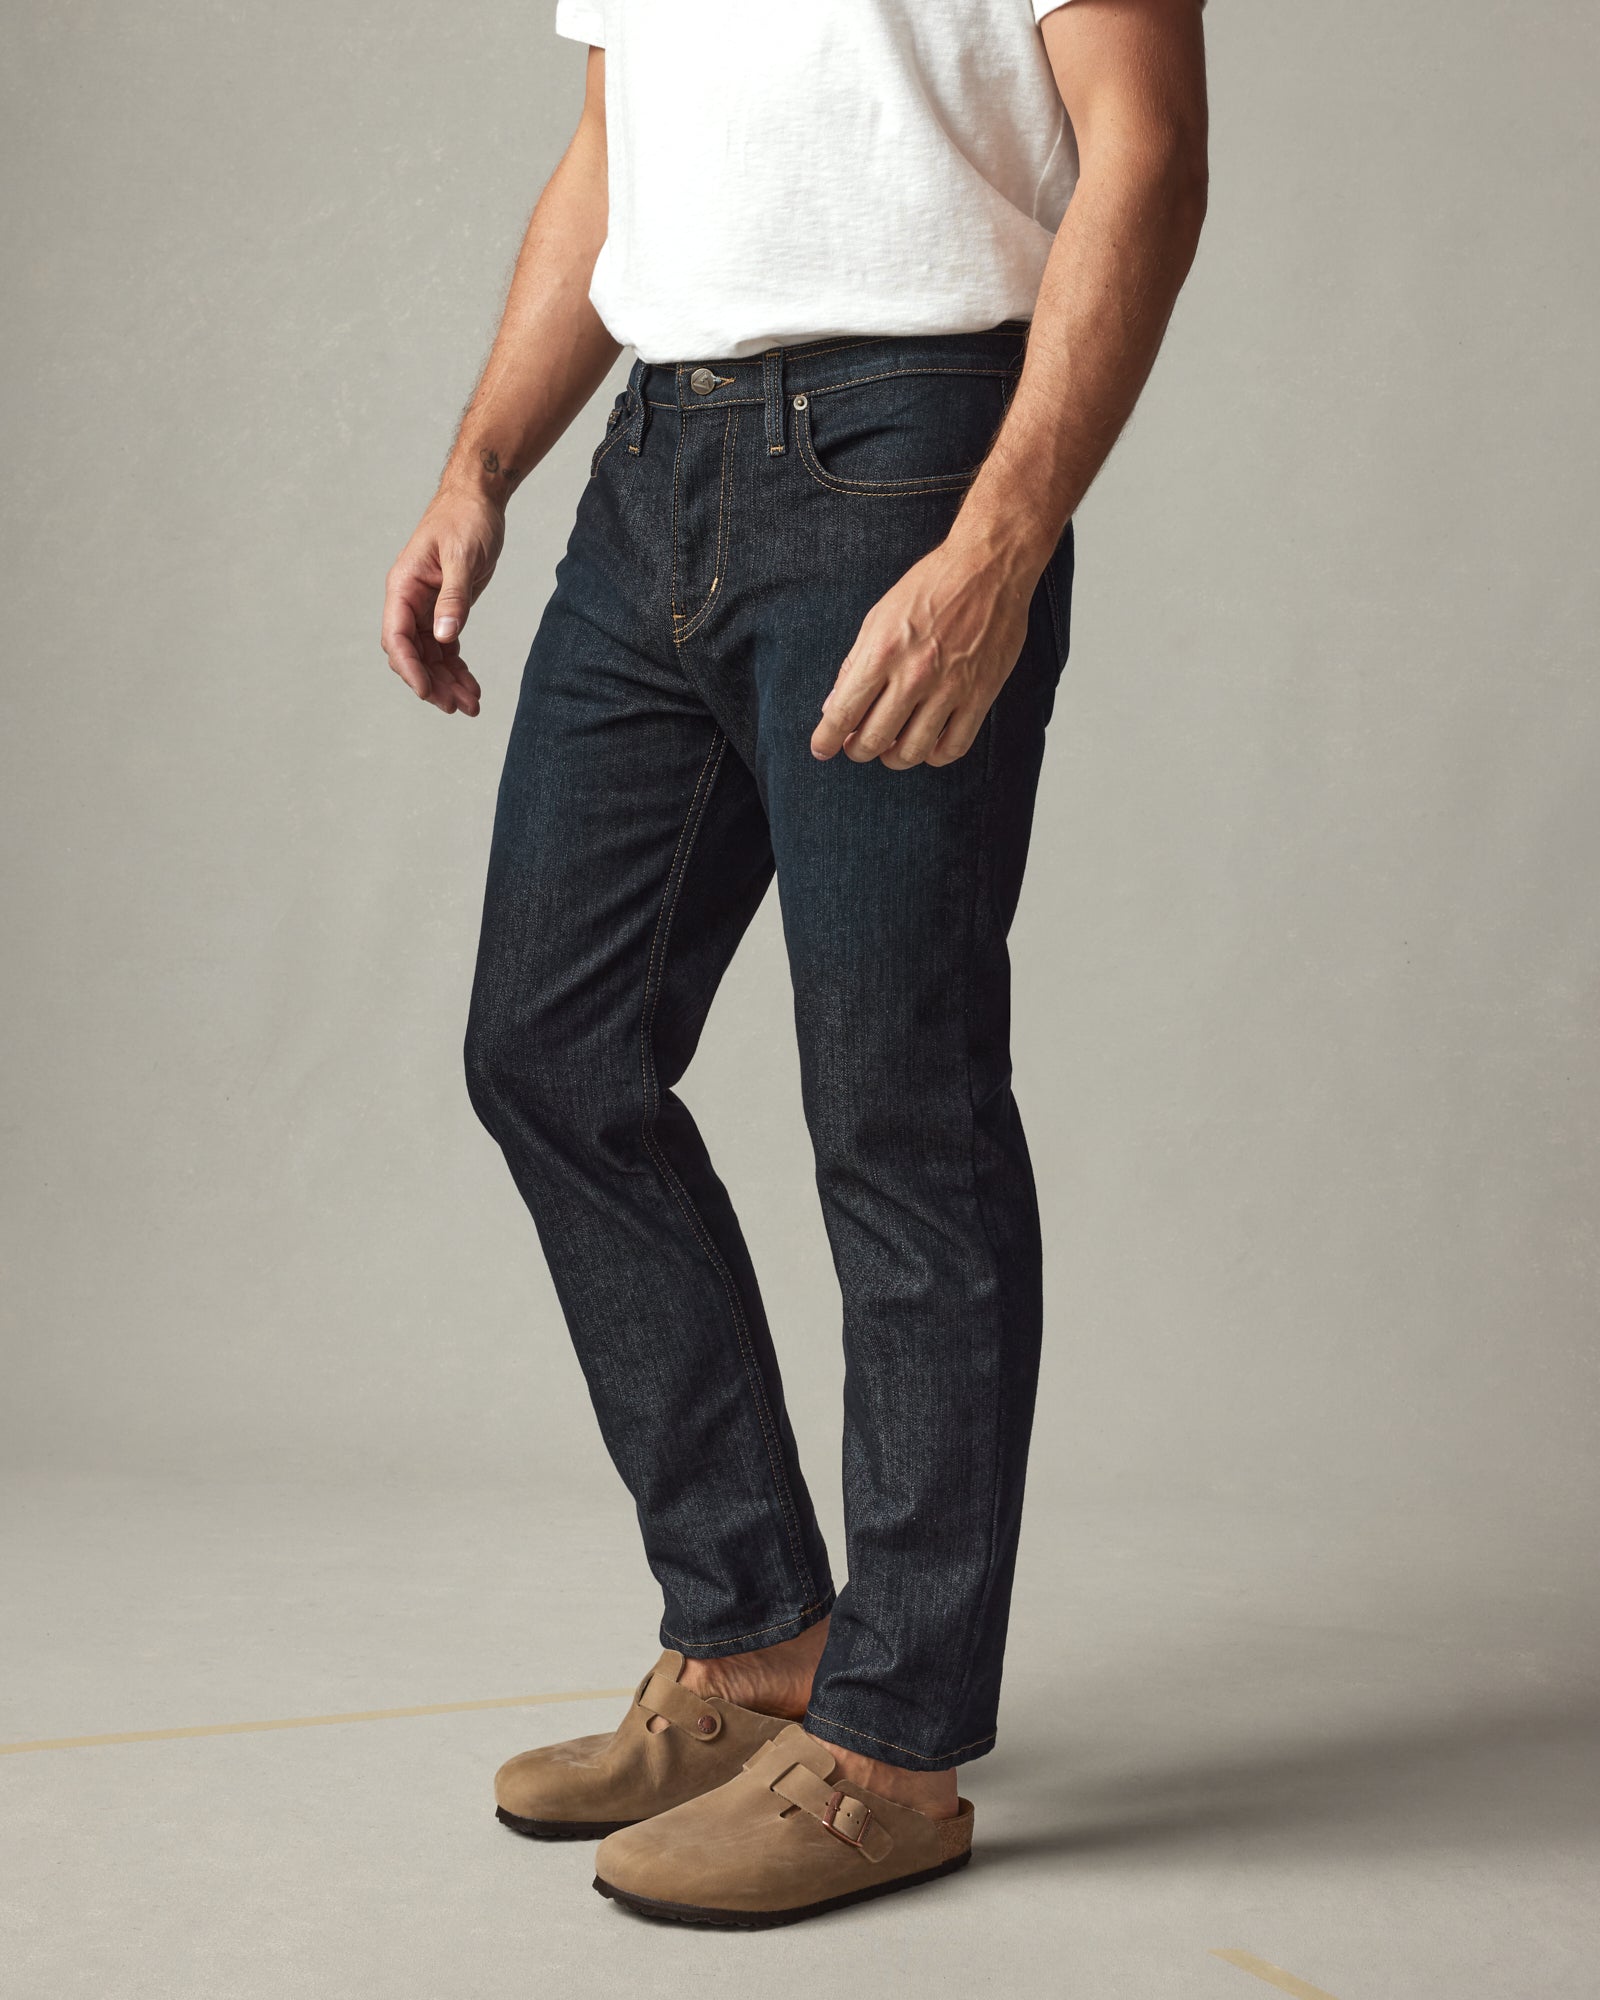 mens dress jeans